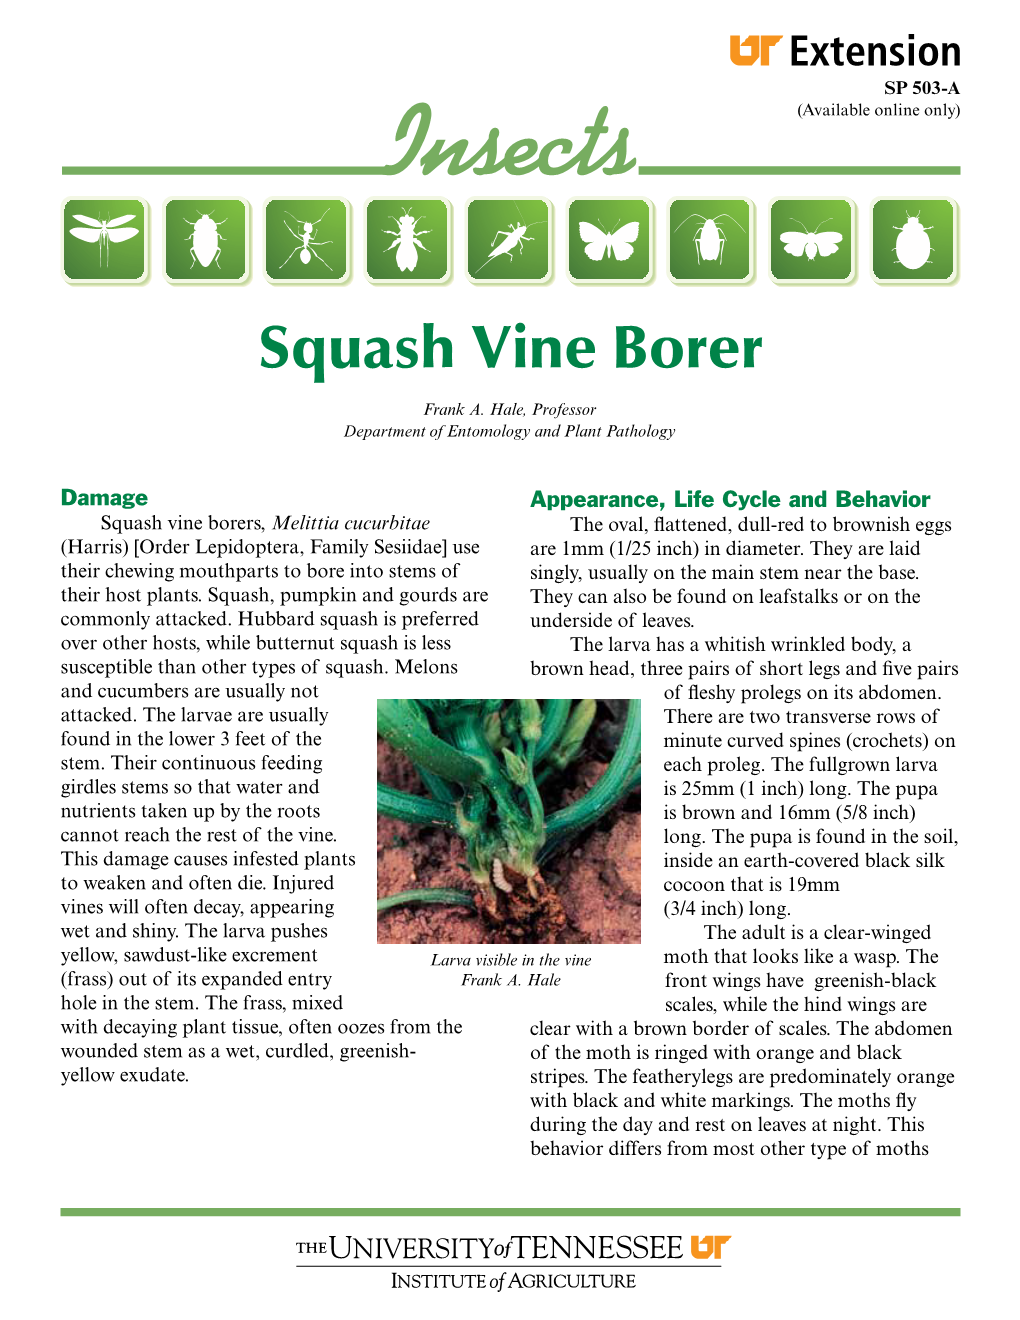 SP 503-A Insects: Squash Vine Borer